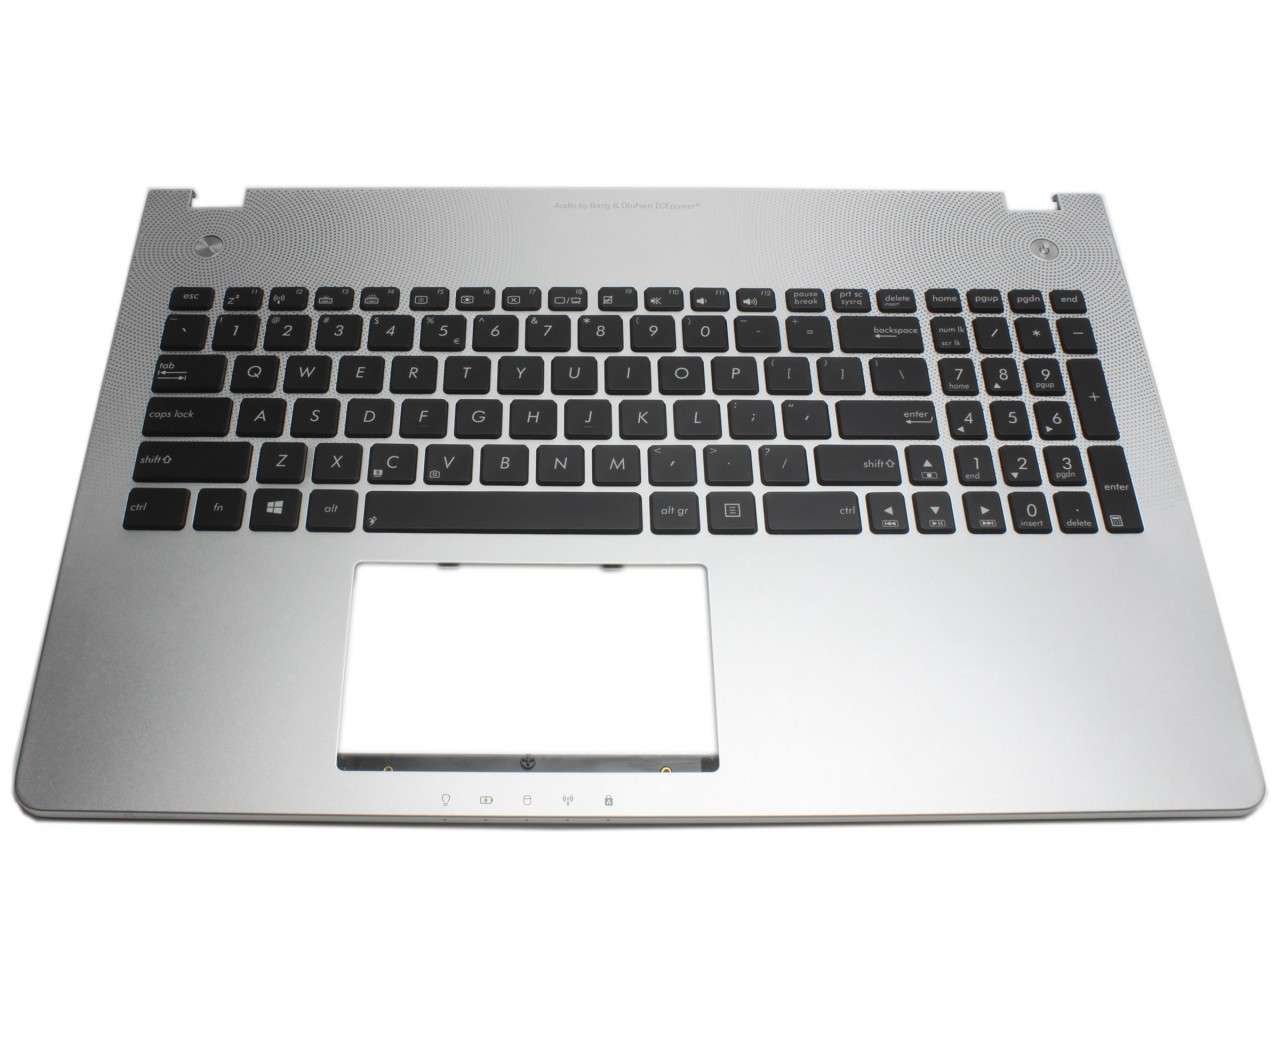 Tastatura Asus R501V8 neagra cu Palmrest argintiu iluminata backlit fara Touchpad